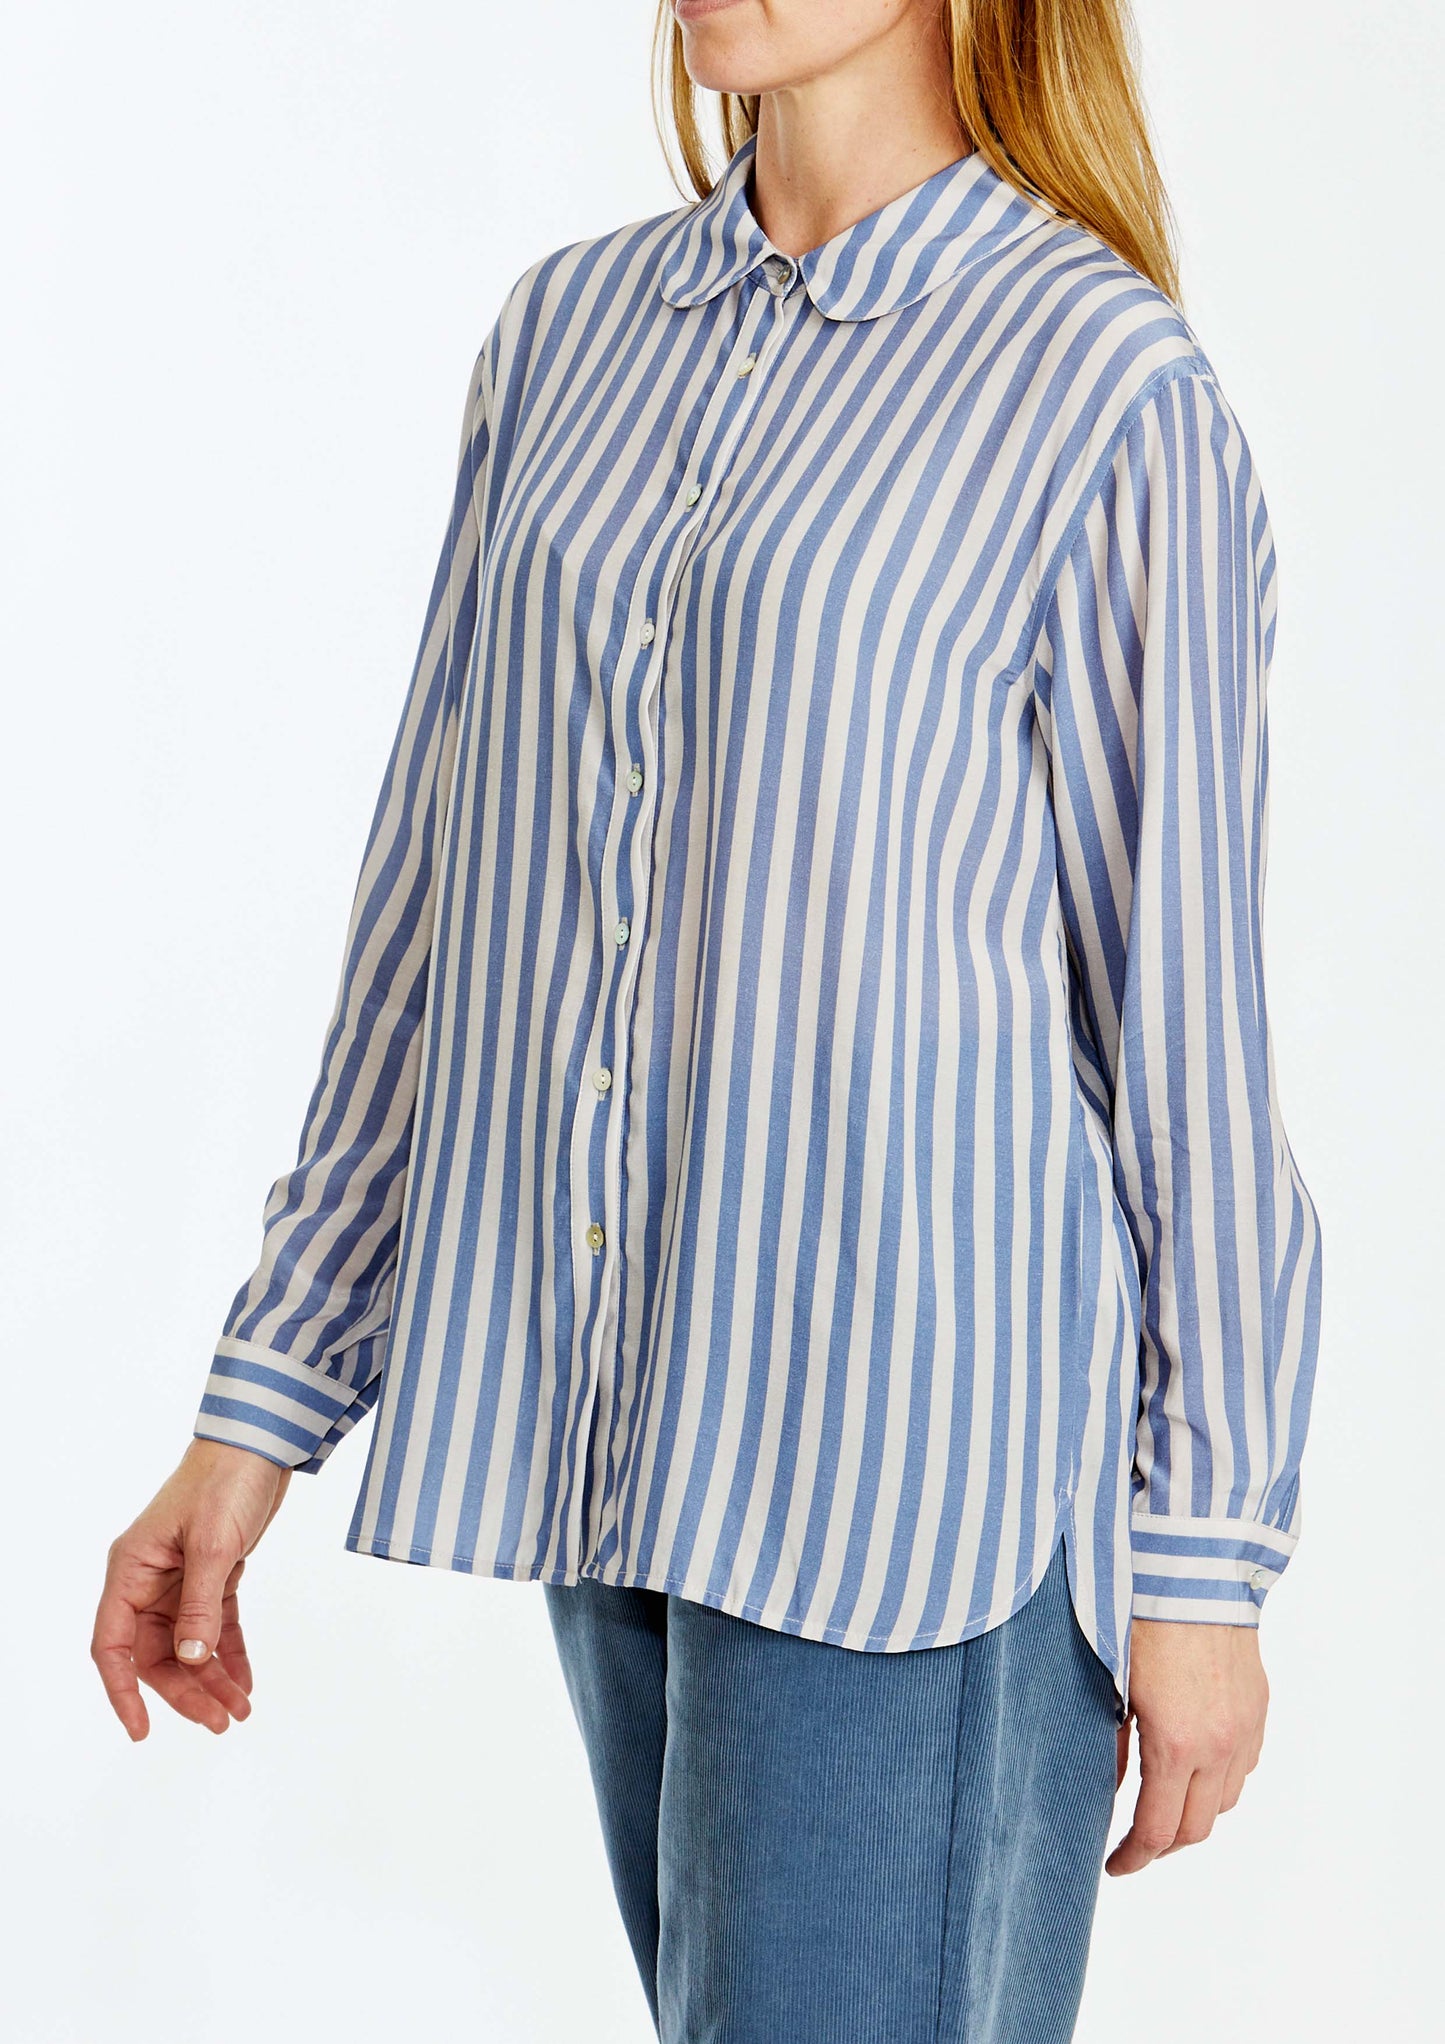 Ping Pong Stripe Shirt - Denim Chino